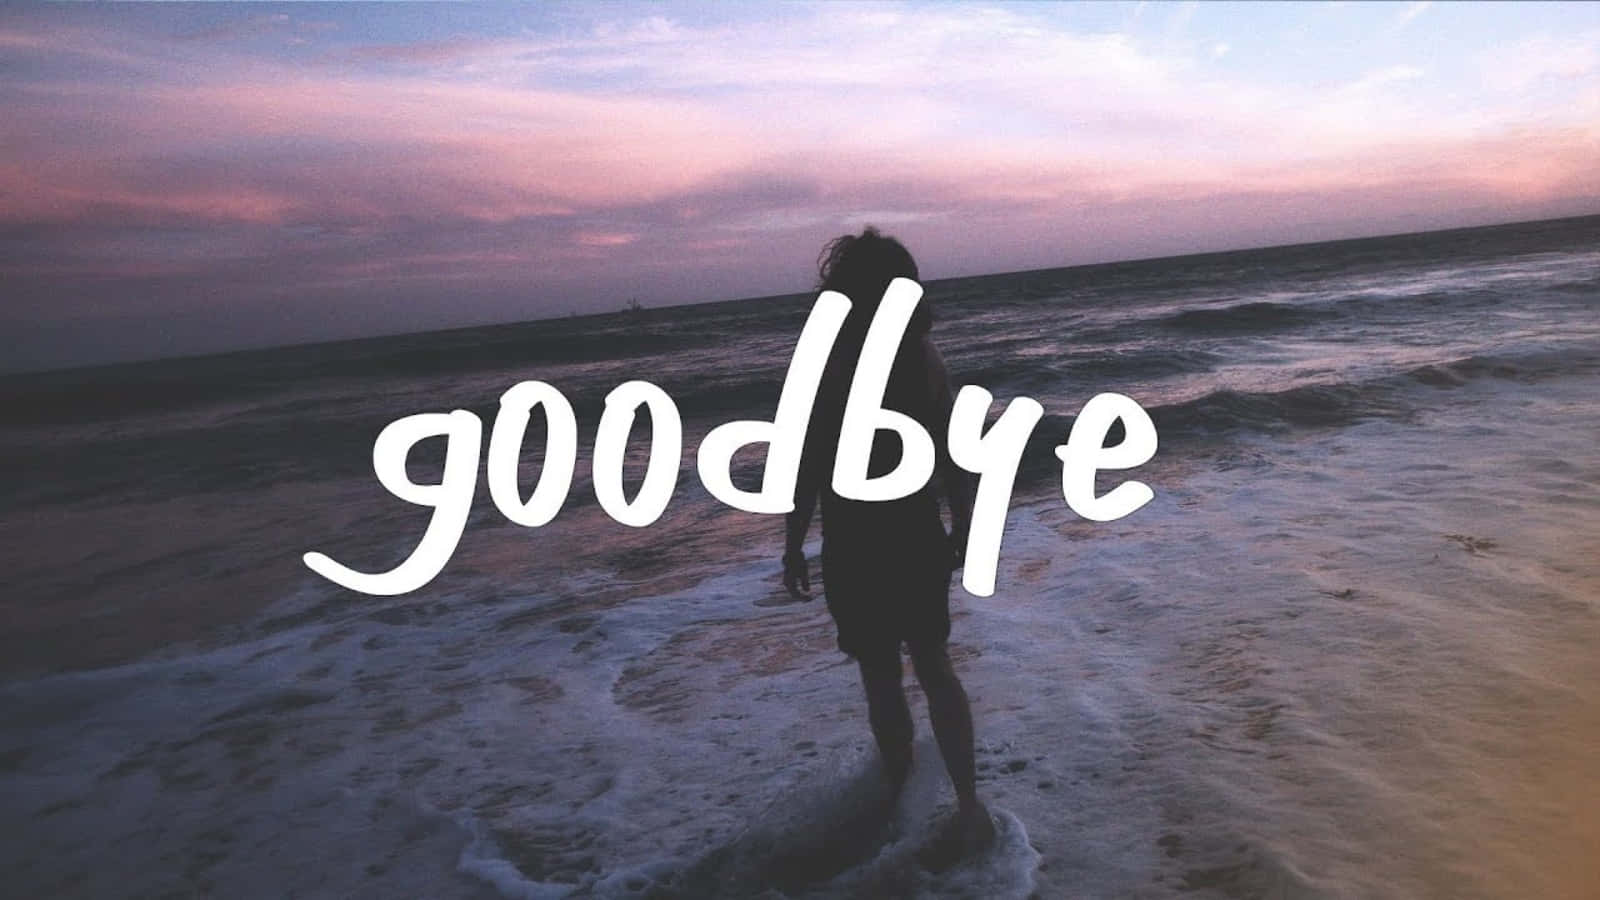 Don't be sad, say goodbye instead.